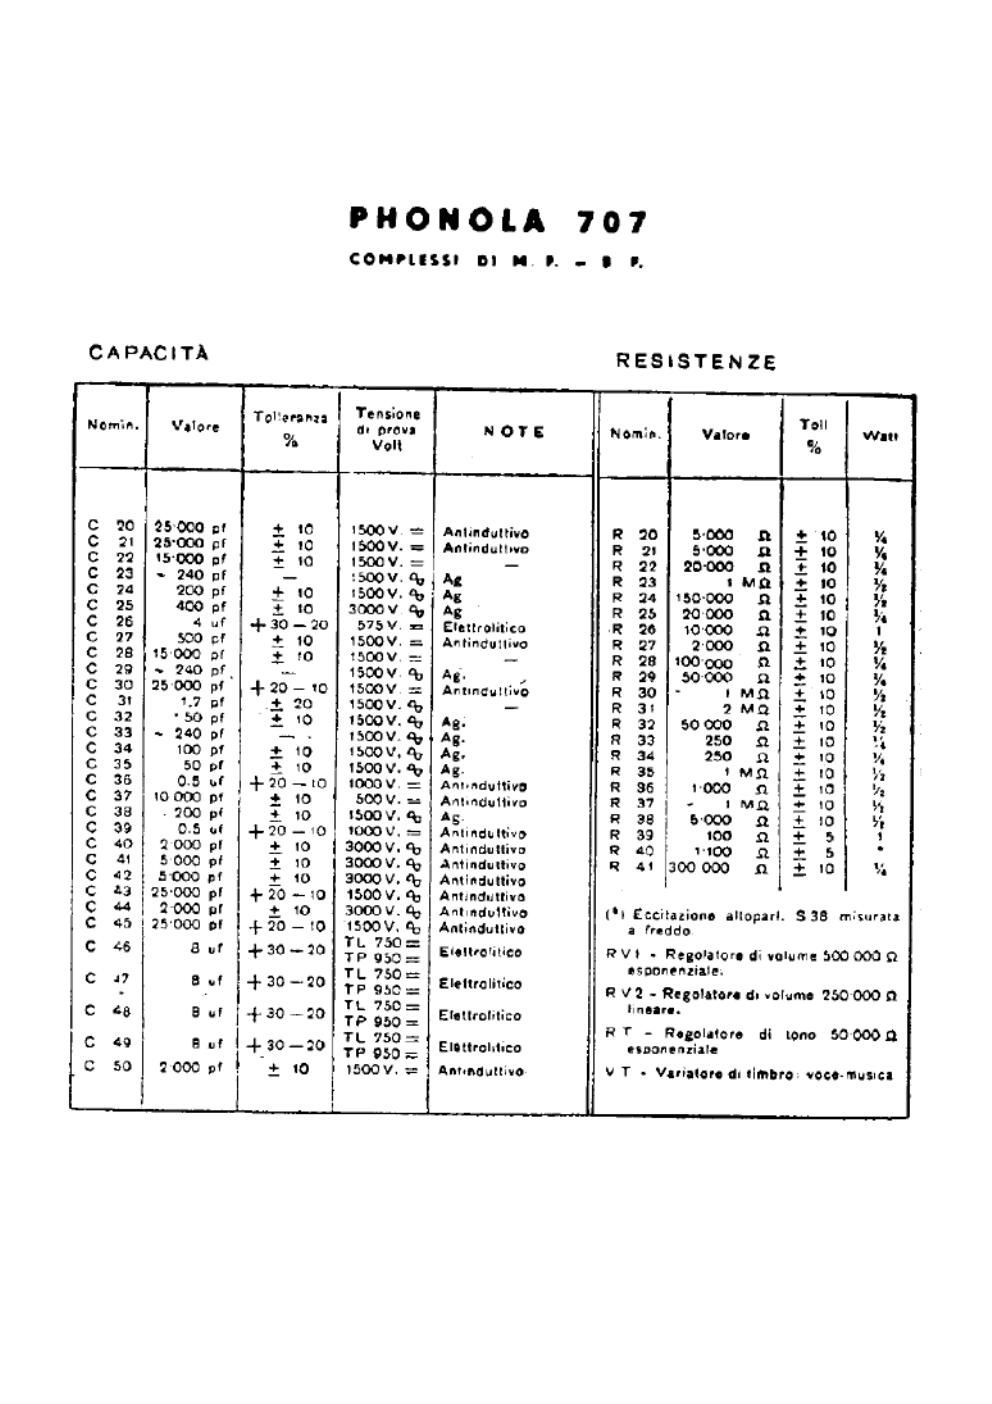 phonola 707 708 709 components